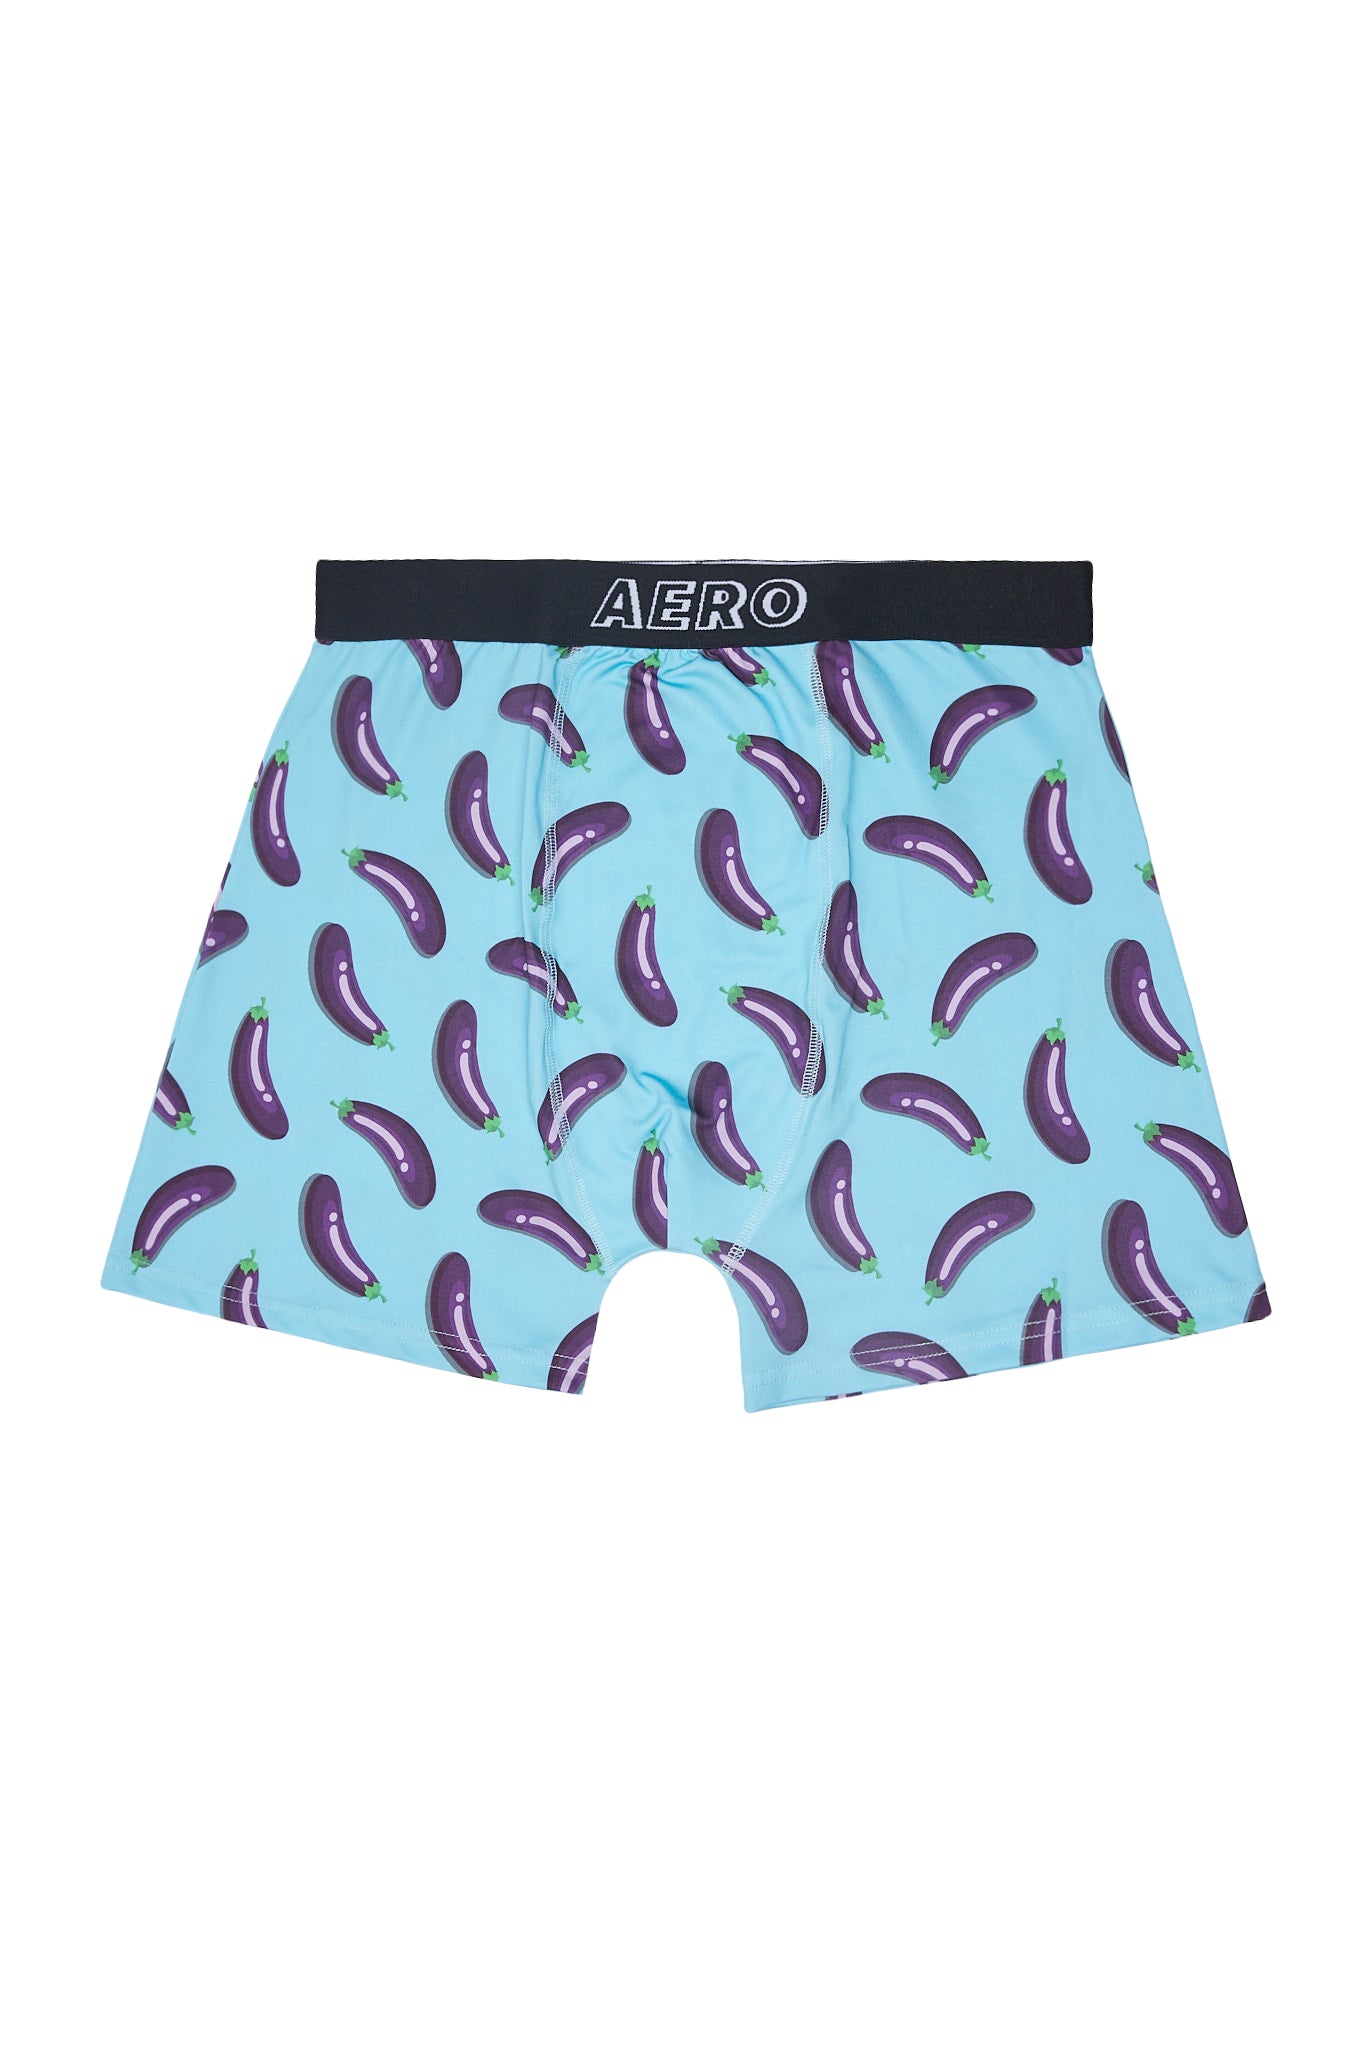 Buy a Aeropostale Mens Pigeon Knit Underwear Boxer Briefs